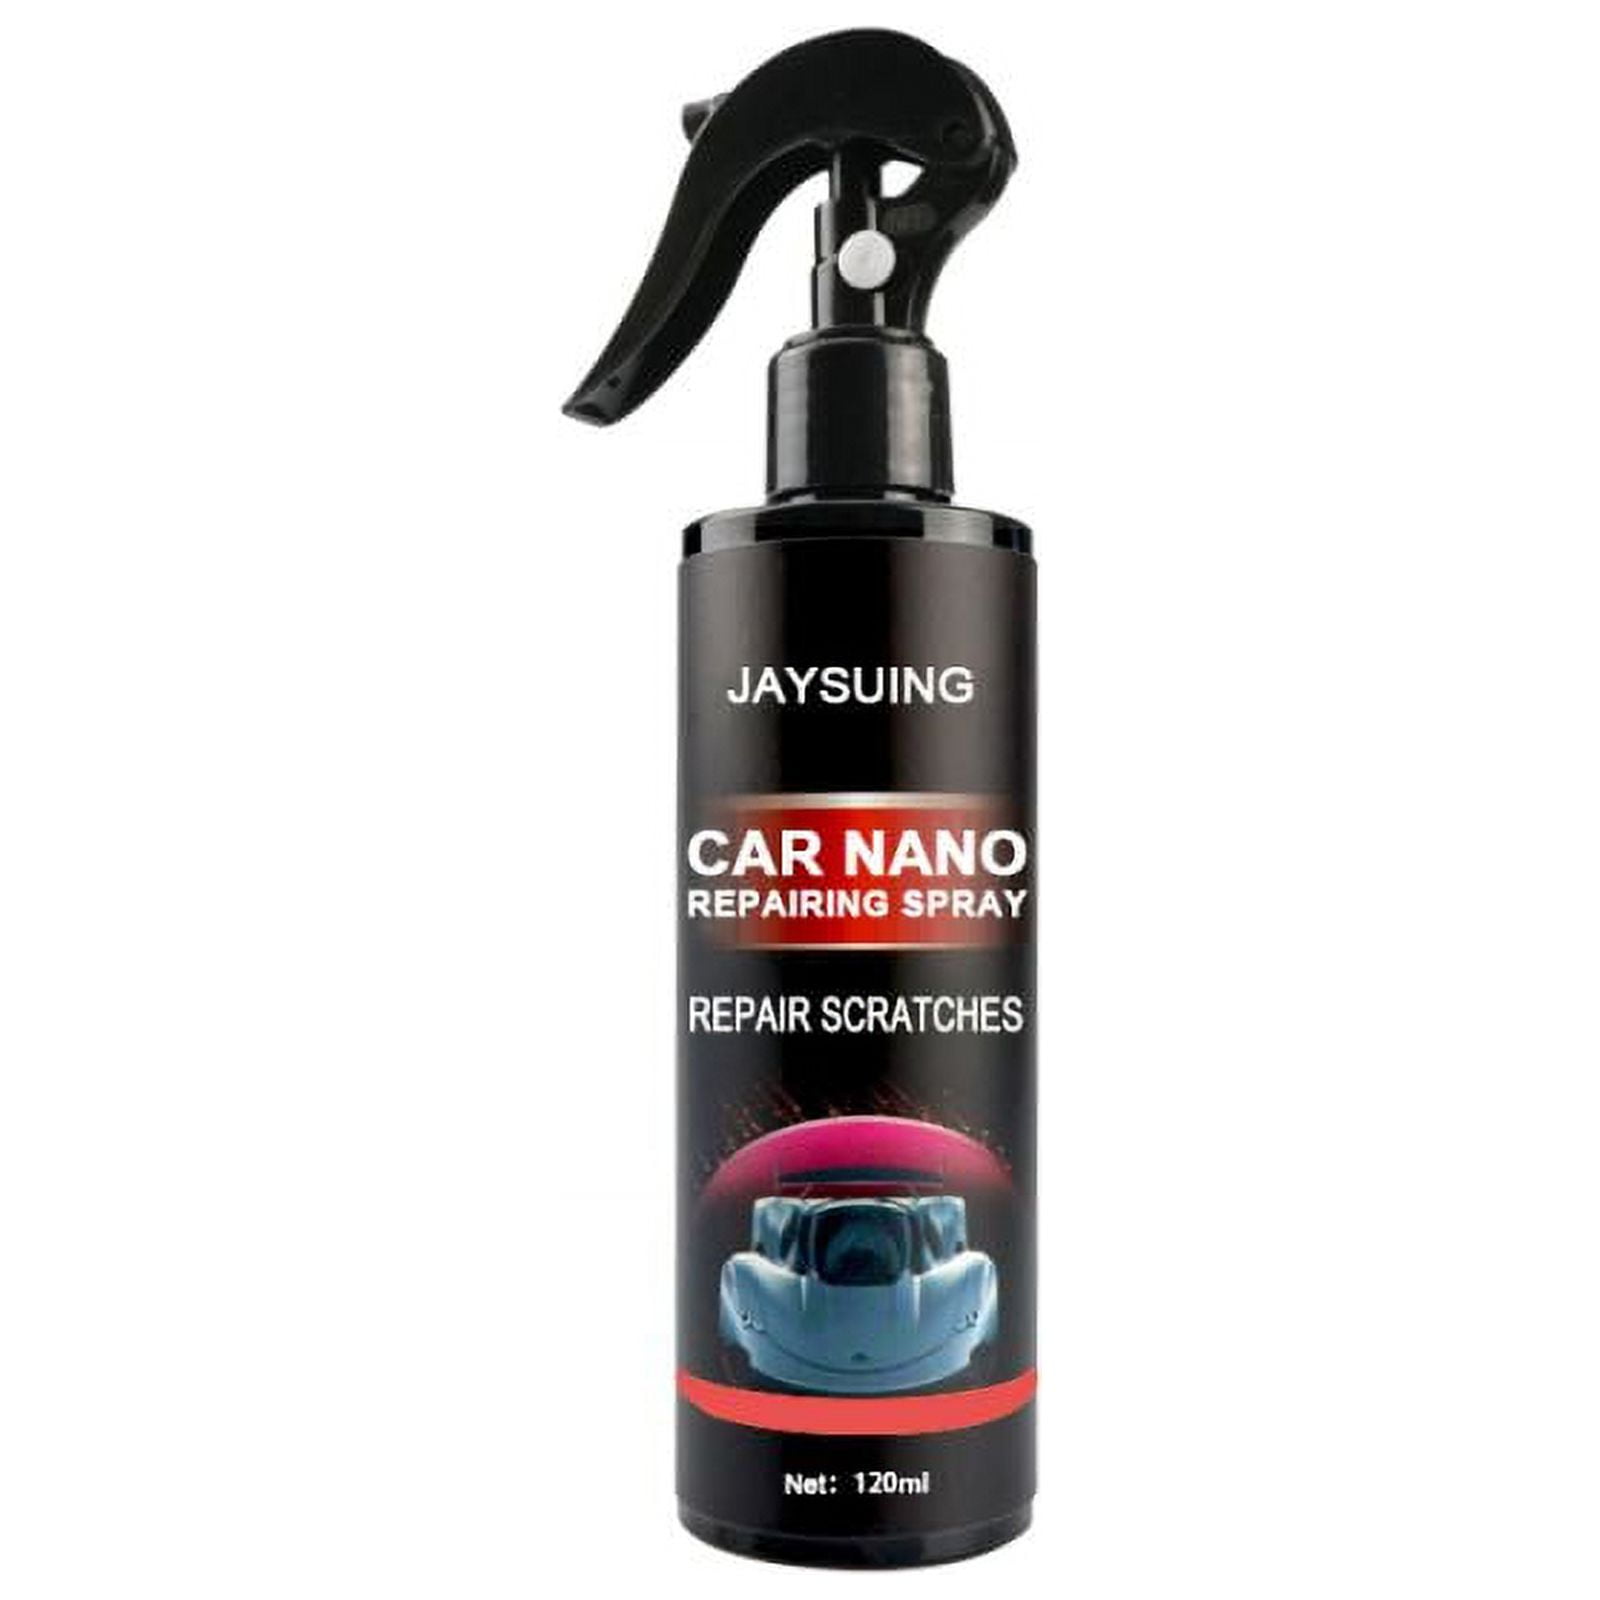 TTCPUYSA Car Nano Repairing Spray,Car Scratch Repair Nano Spray Deep  Scratch Remover,Auto Detailing Glasscoat Car Polish-Remove  Scratches,Reduces